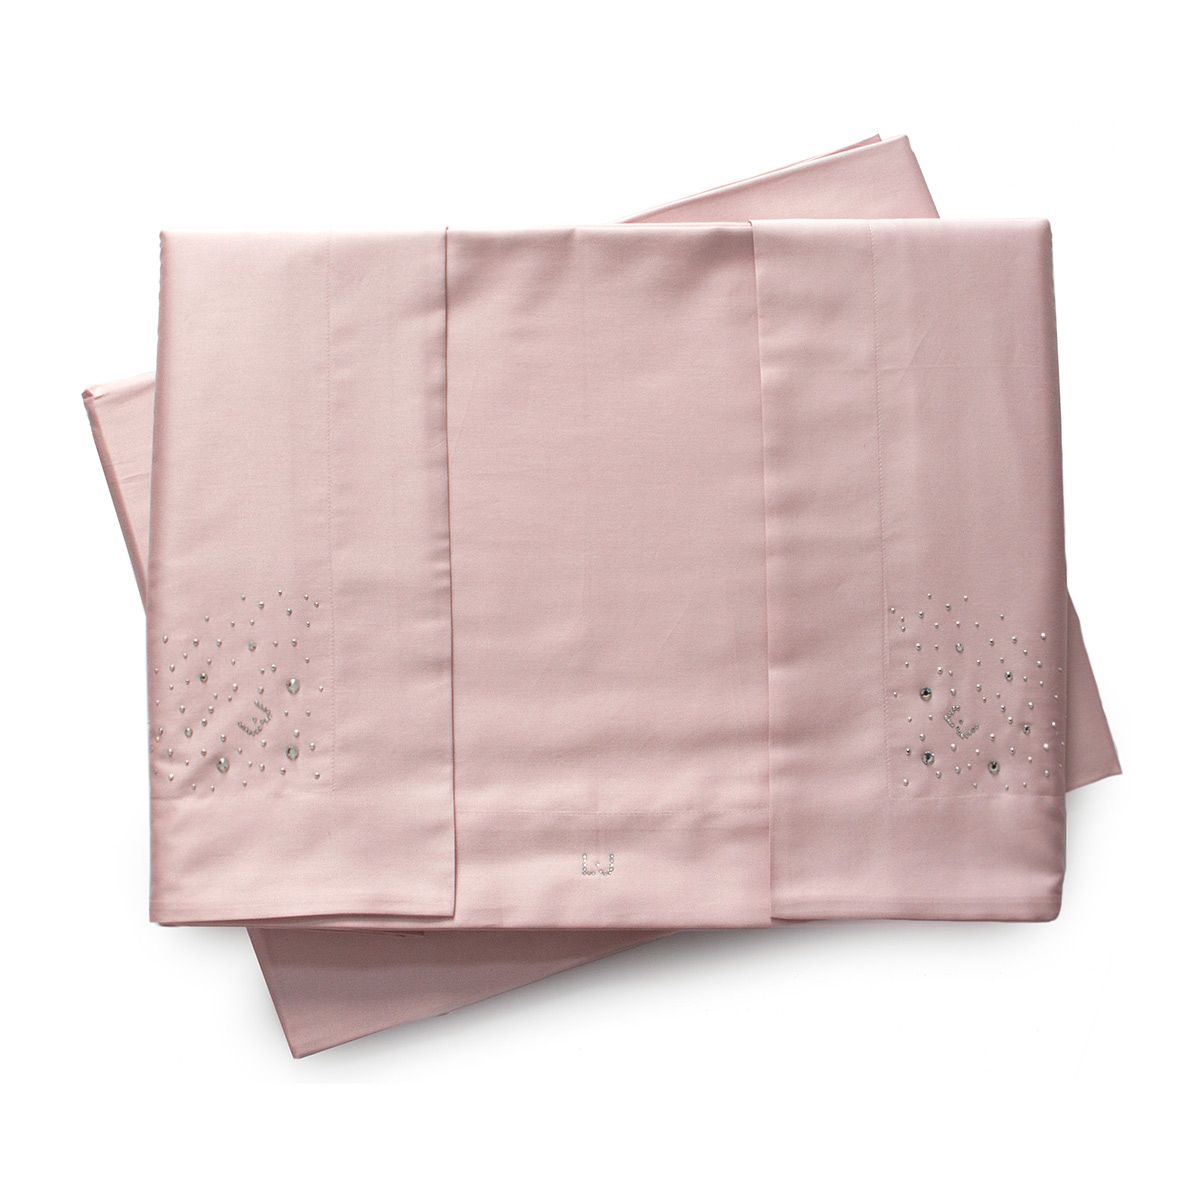 Erica Liu Jo sheets set in double cotton satin